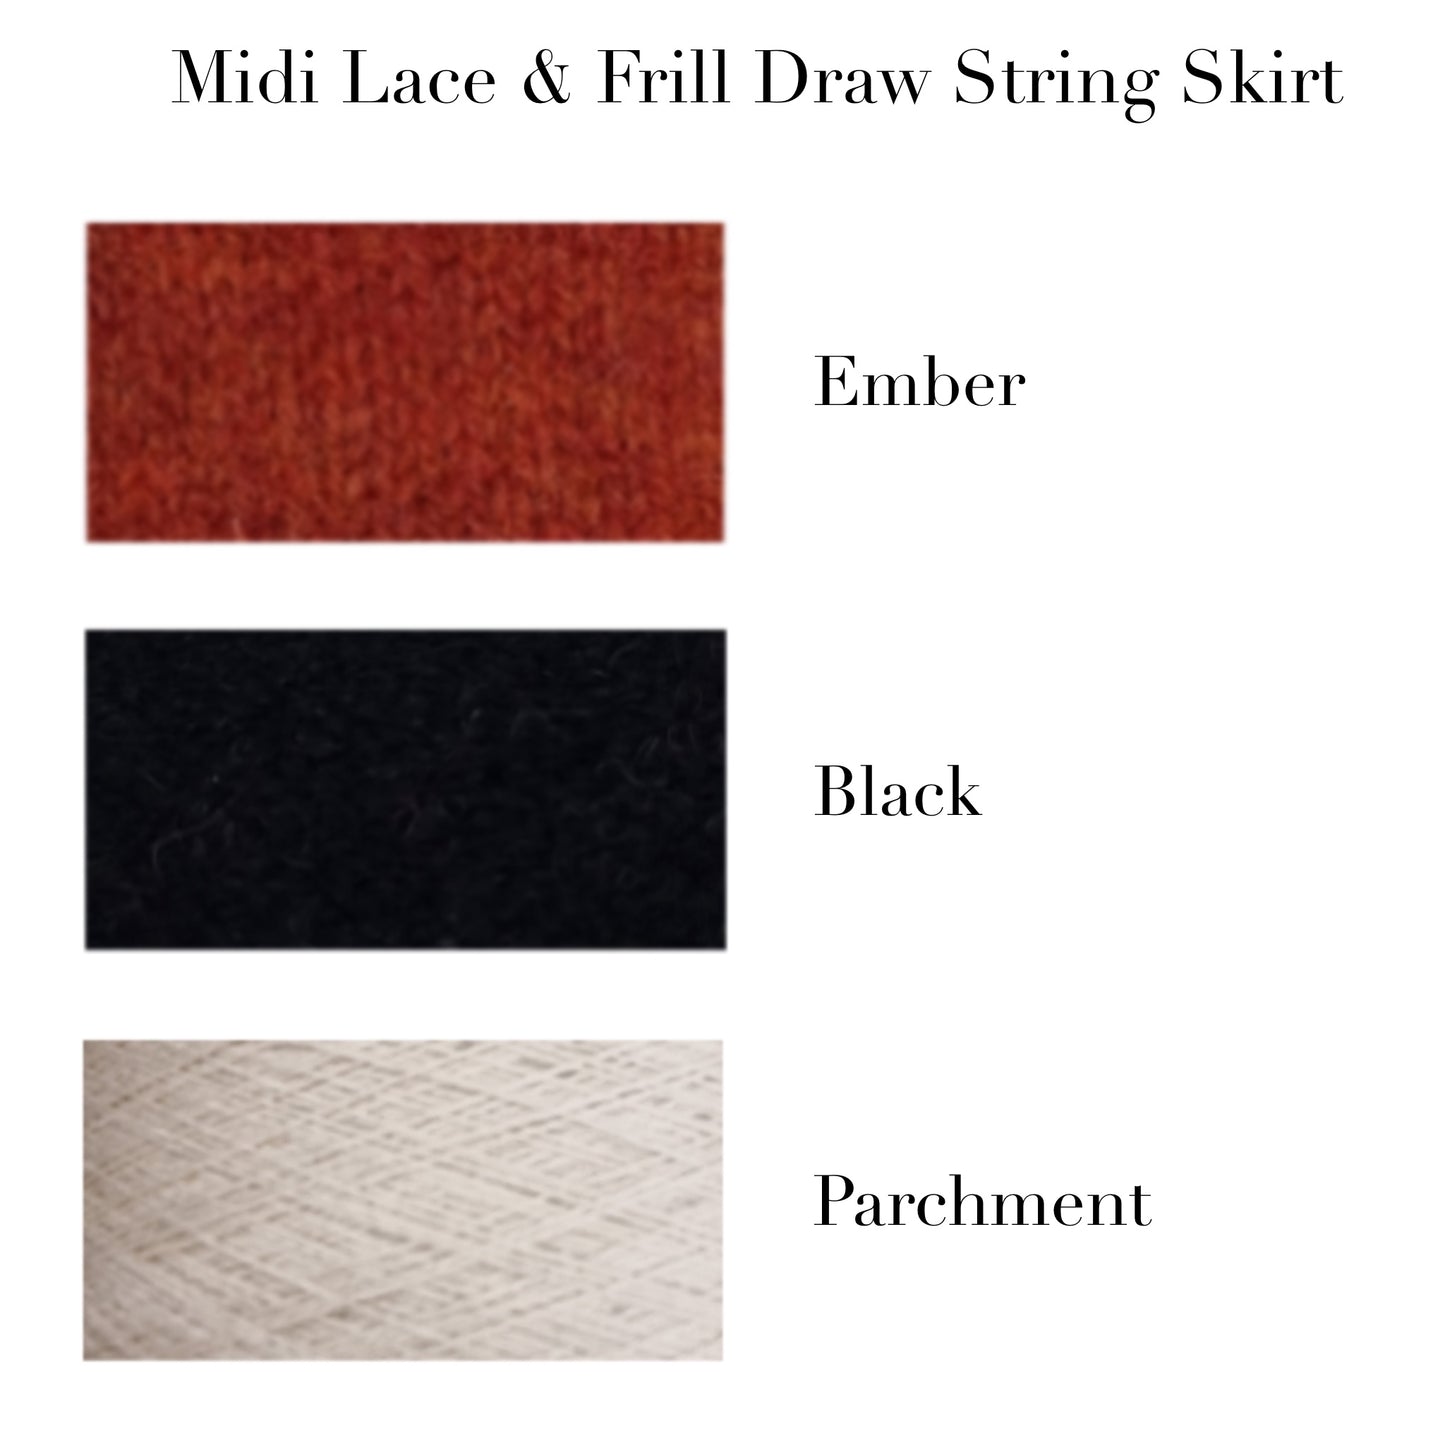 Midi Lace & Frill Draw String Skirt